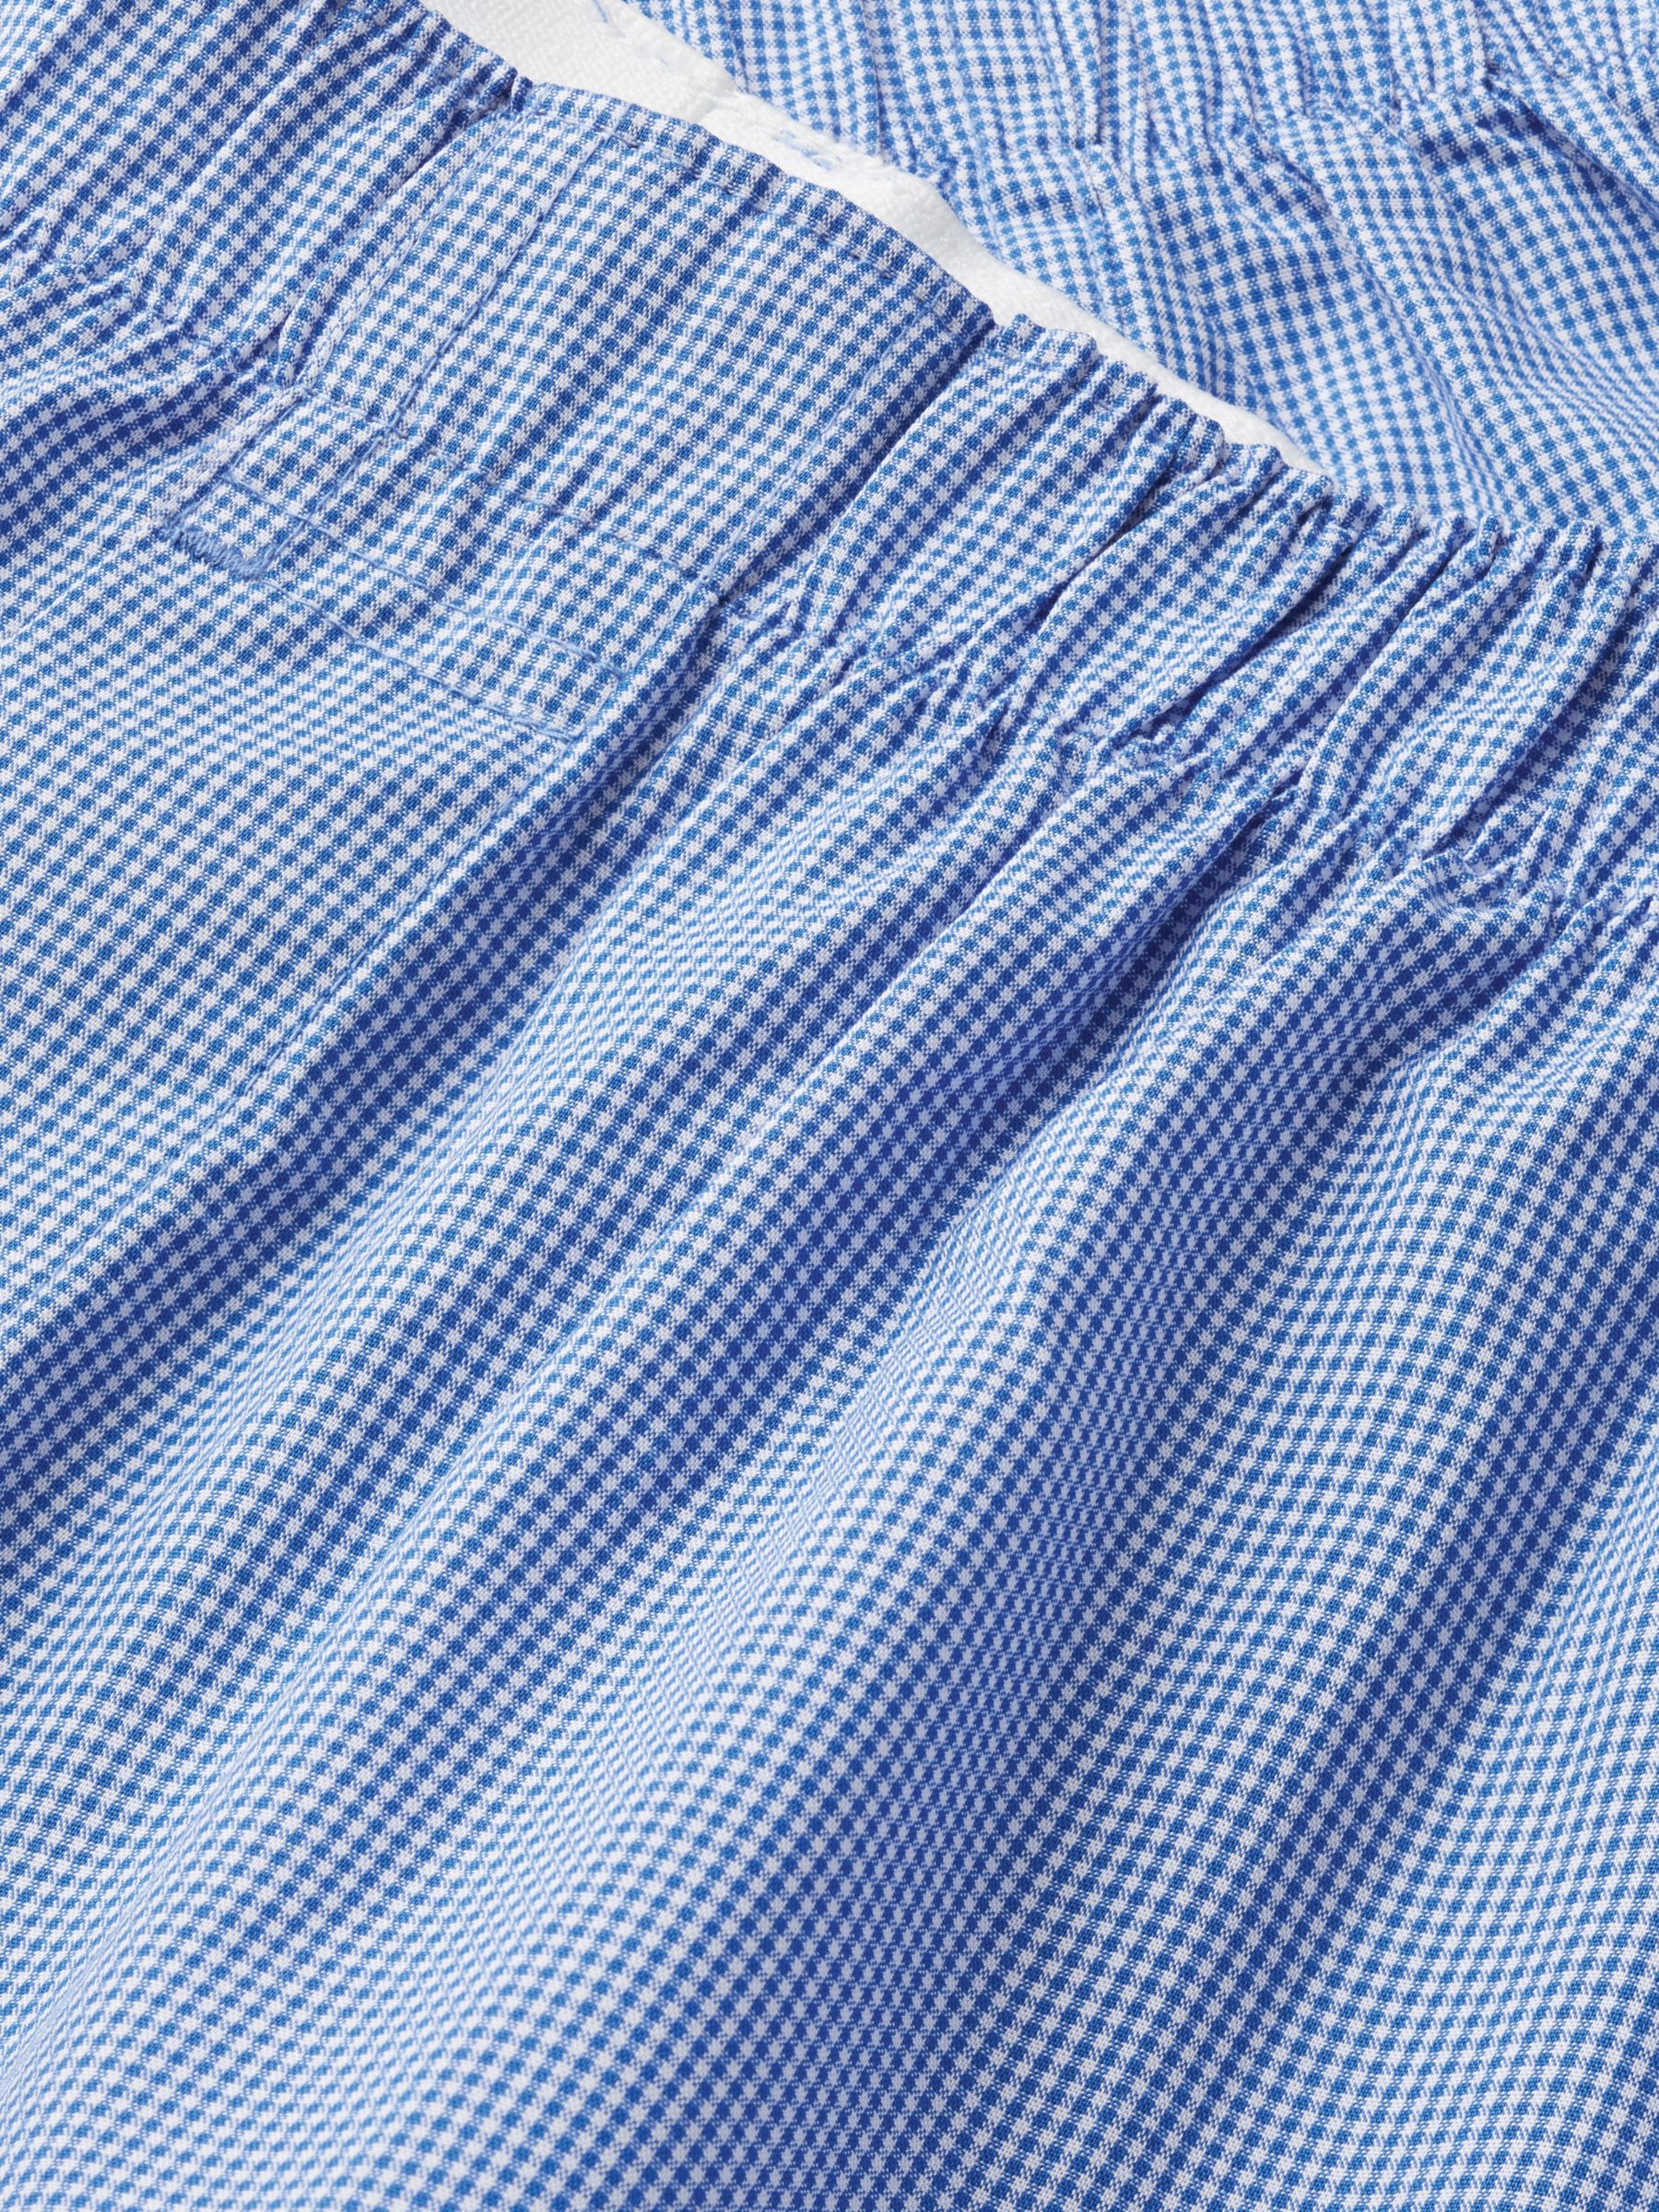 Charles Tyrwhitt Micro Grid Woven Boxers, Royal Blue, M